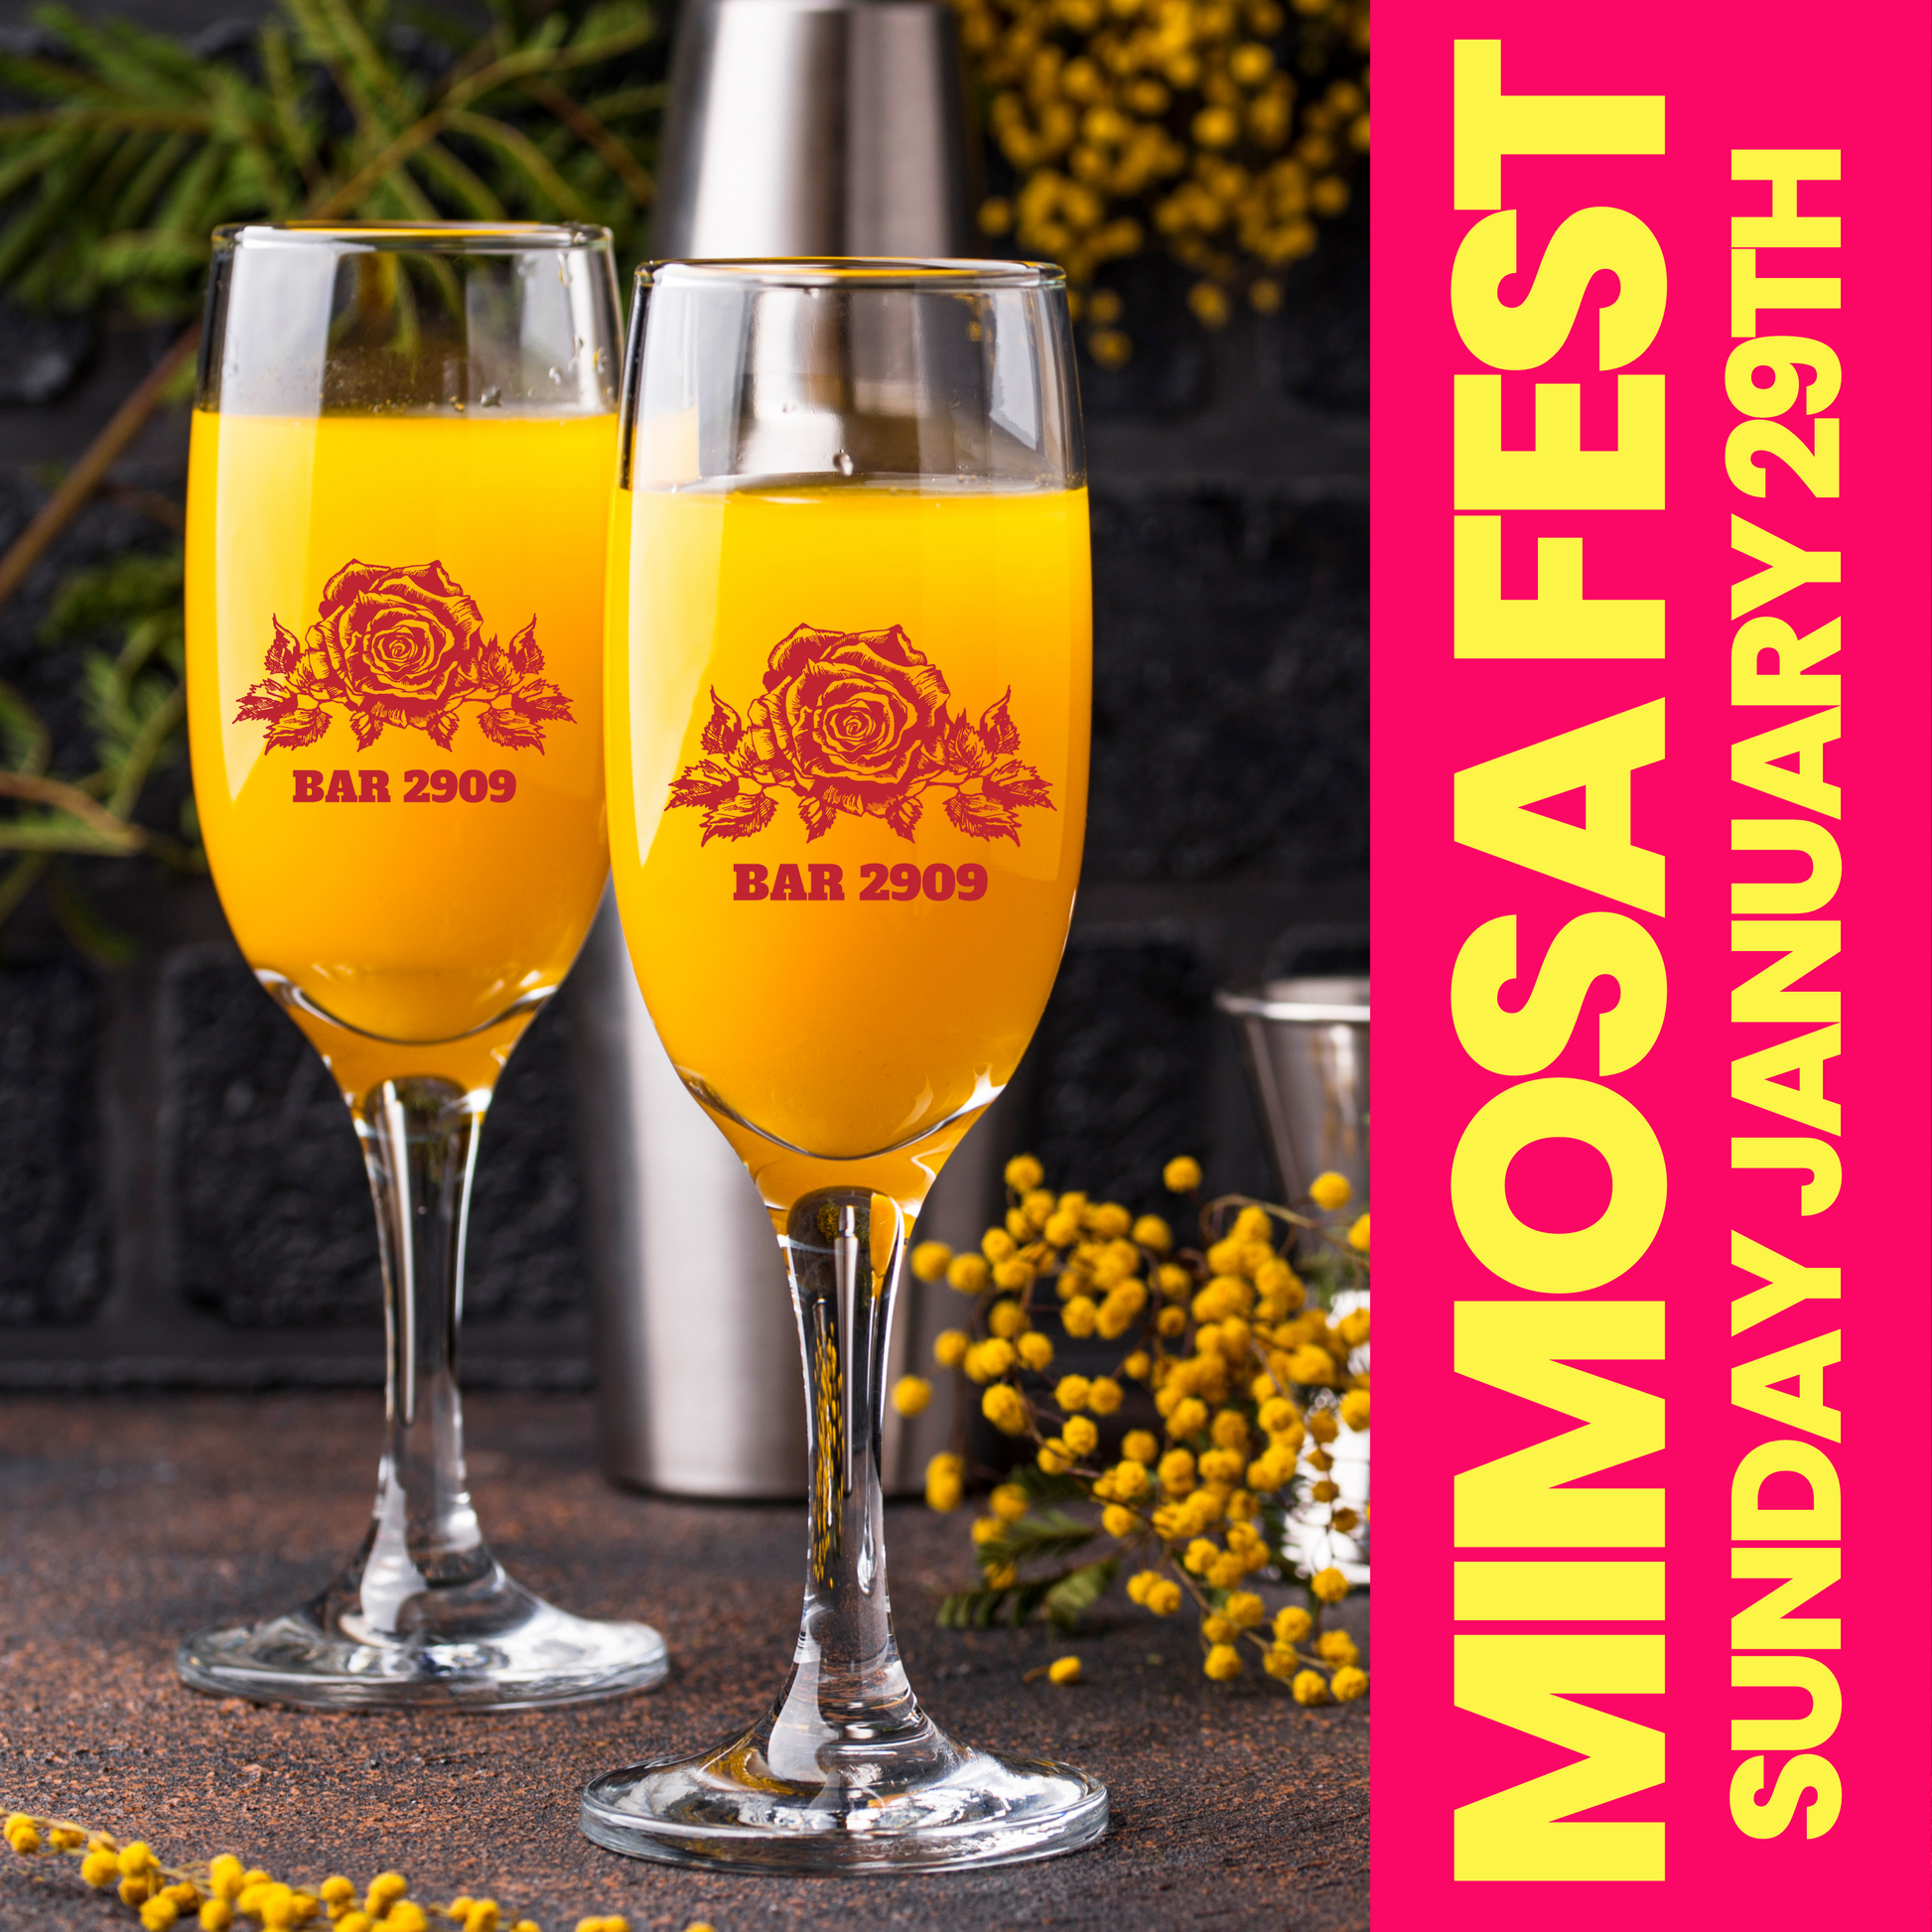 La Marca Mimosa Basket - The Park Wine and Spirits, BEER, WINE, LIQUOR,  SPIRITS, Broomfield, CO